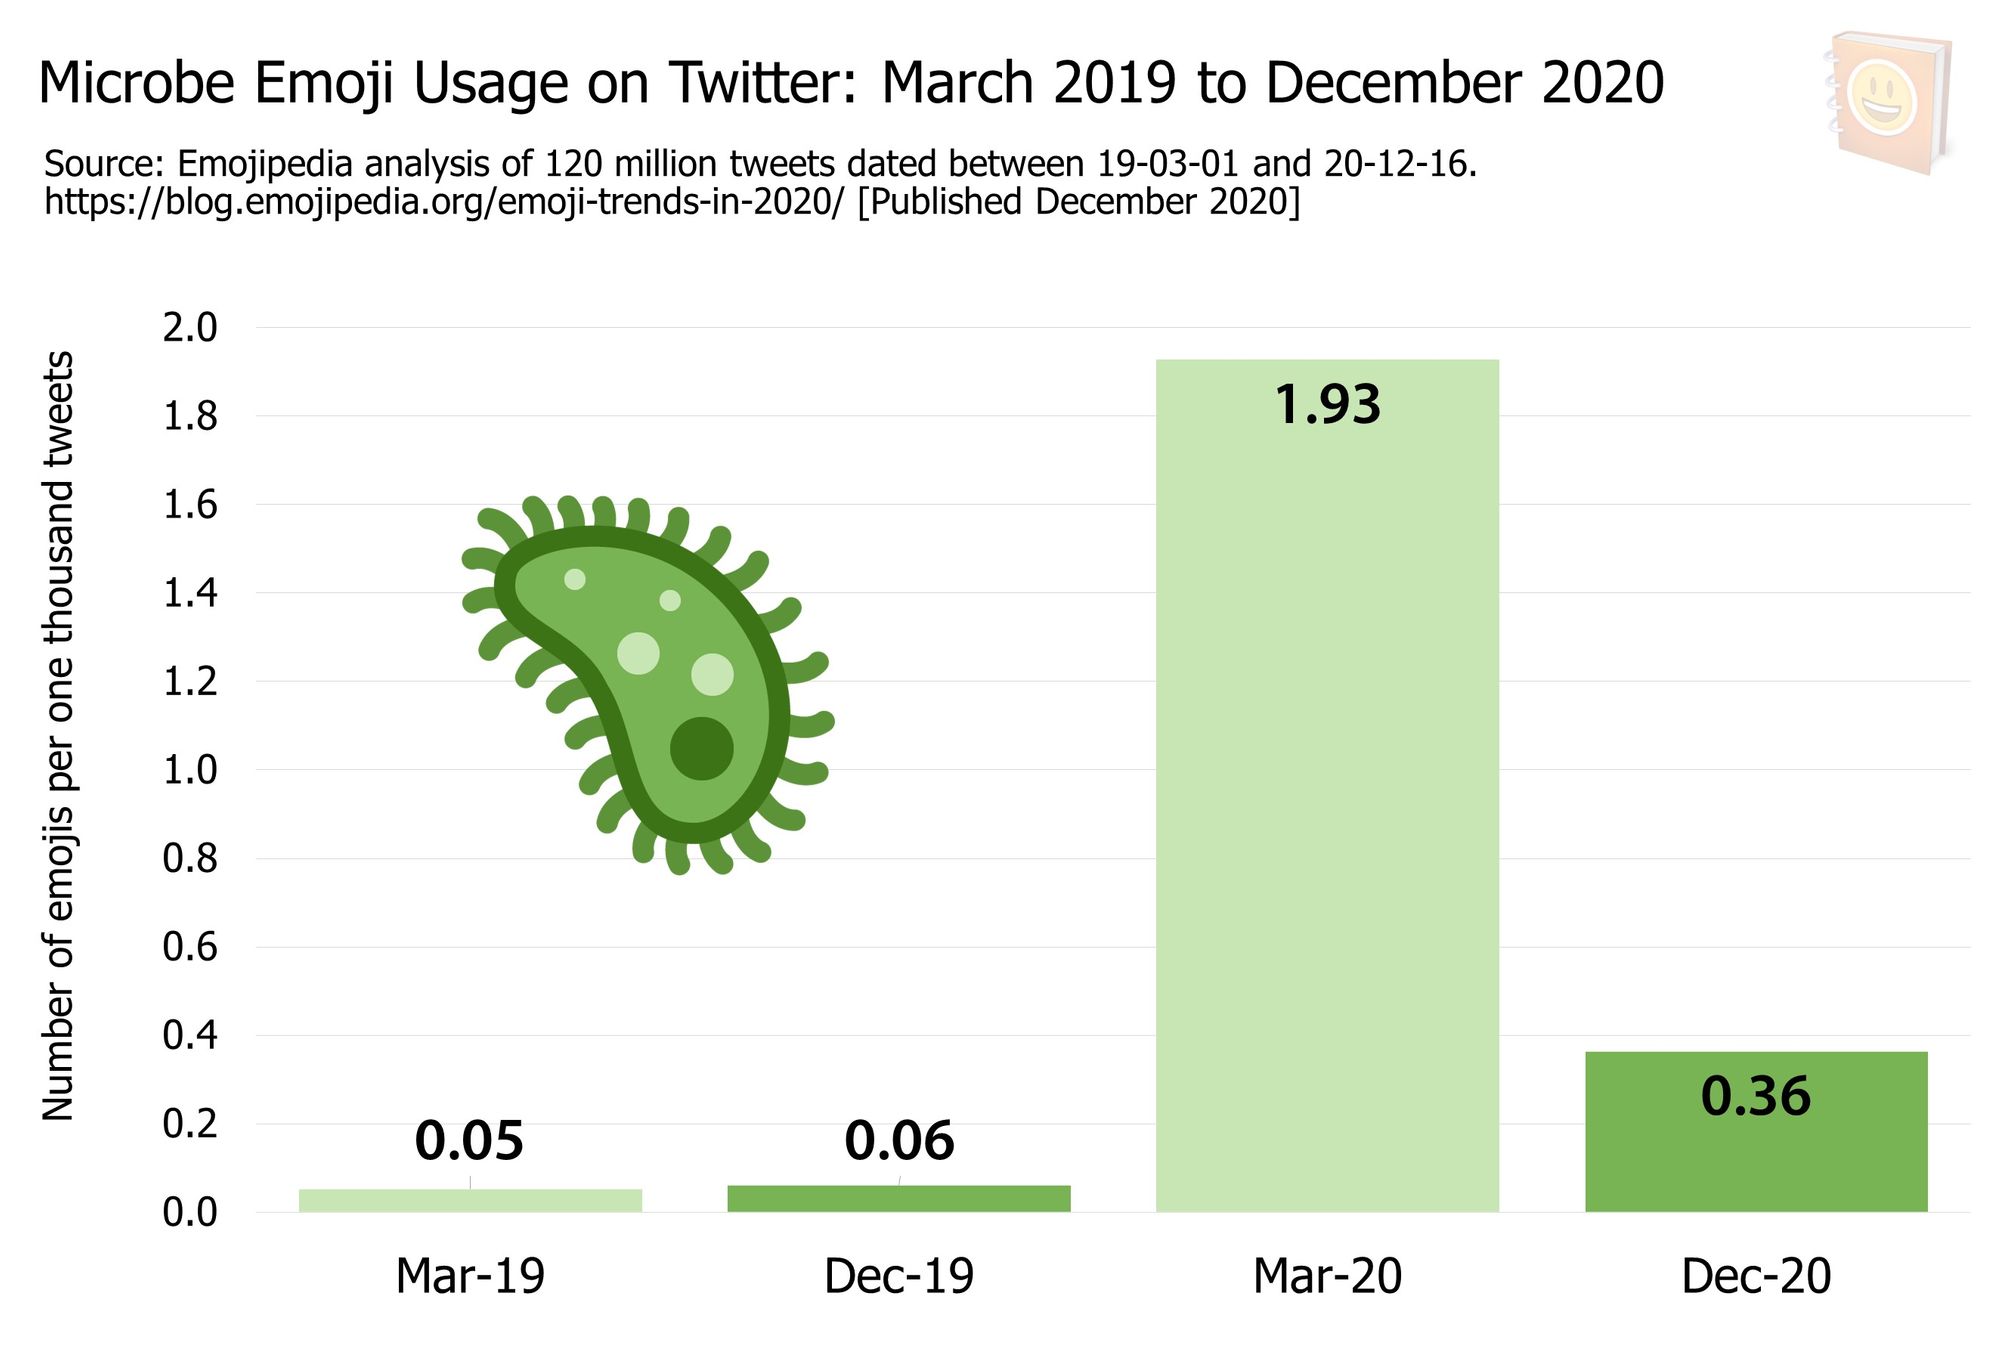 Emoji-Trends-In-2020---Microbe-Emoji-Usage-on-Twitter-March-2019-to-December-2020